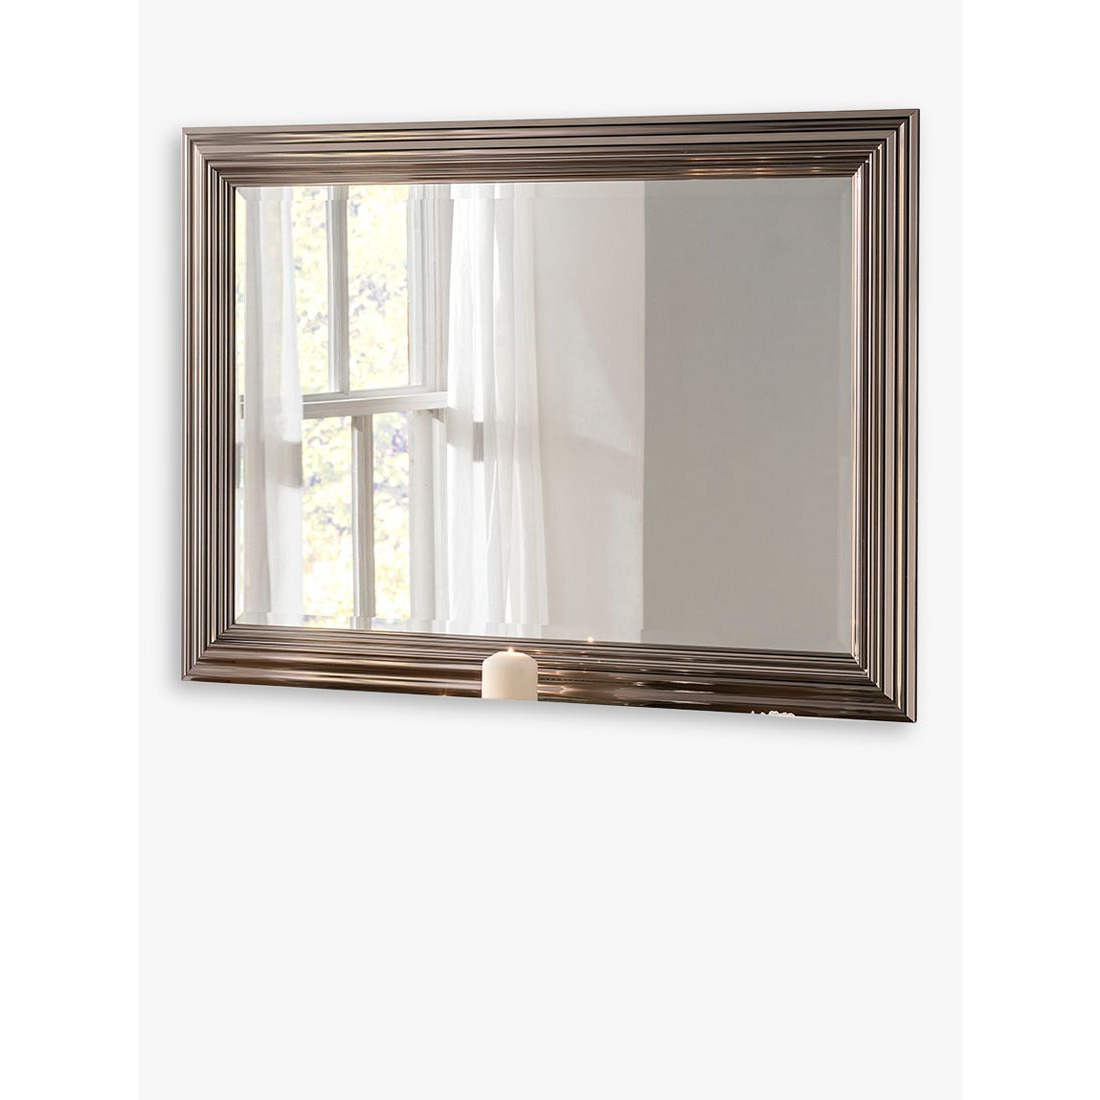 Yearn Contemporary Rectangular Wall Mirror, 74 x 102cm - image 1